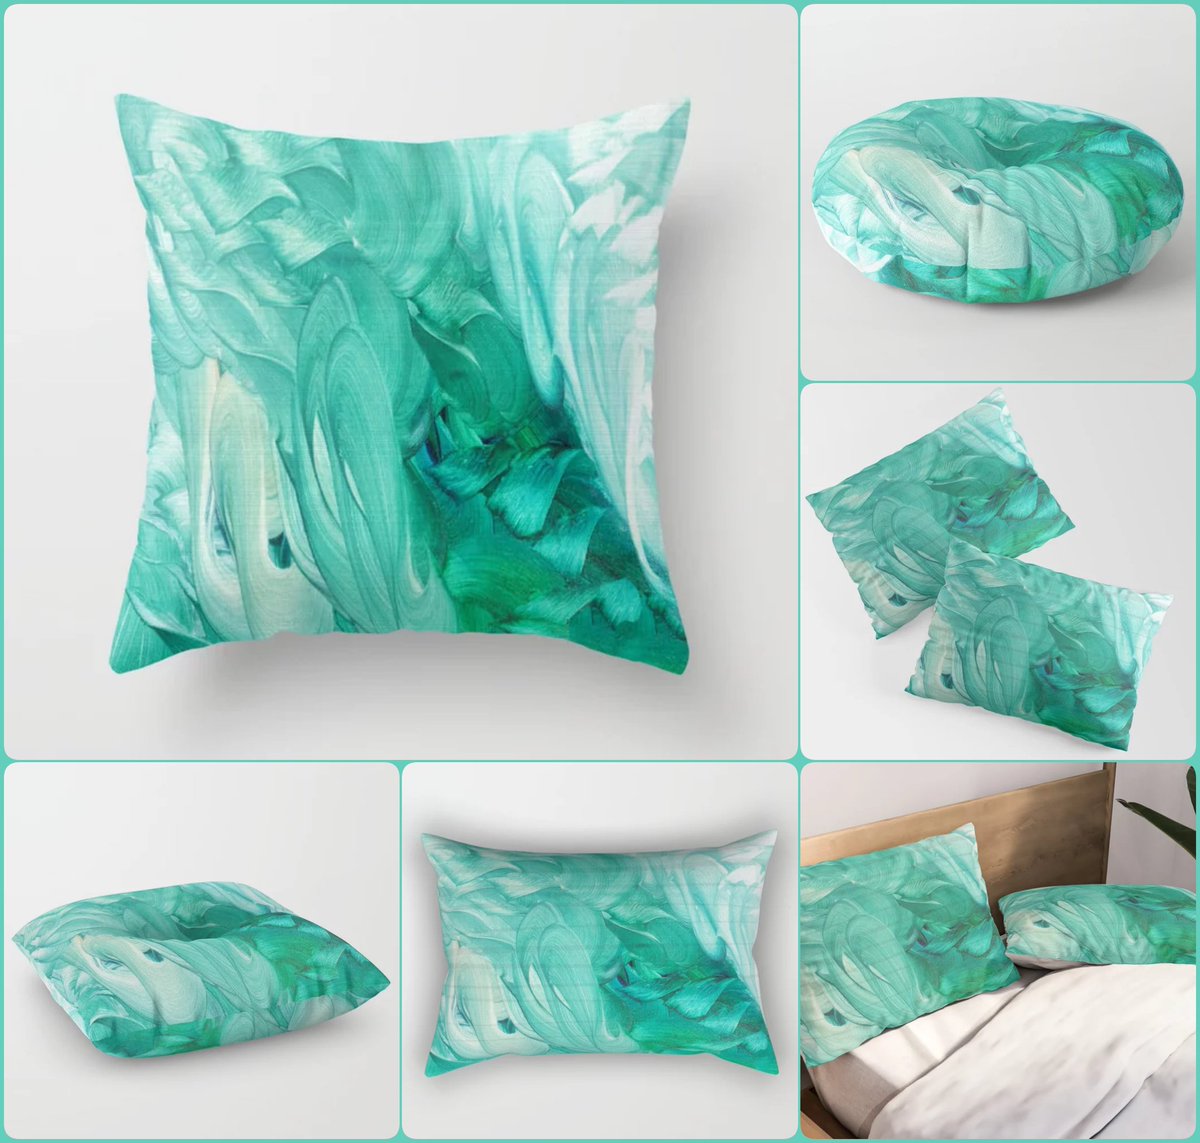 Mara Throw Pillow~by Art Falaxy~
~Unique Pillows!~
#artfalaxy #art #bedroom #pillows #homedecor #society6 #Society6max #swirls #modern #trendy #accessories #accents #floorpillows #pillows #shams #blankets

society6.com/product/mara14…
COLLECTION: society6.com/art/mara149077…